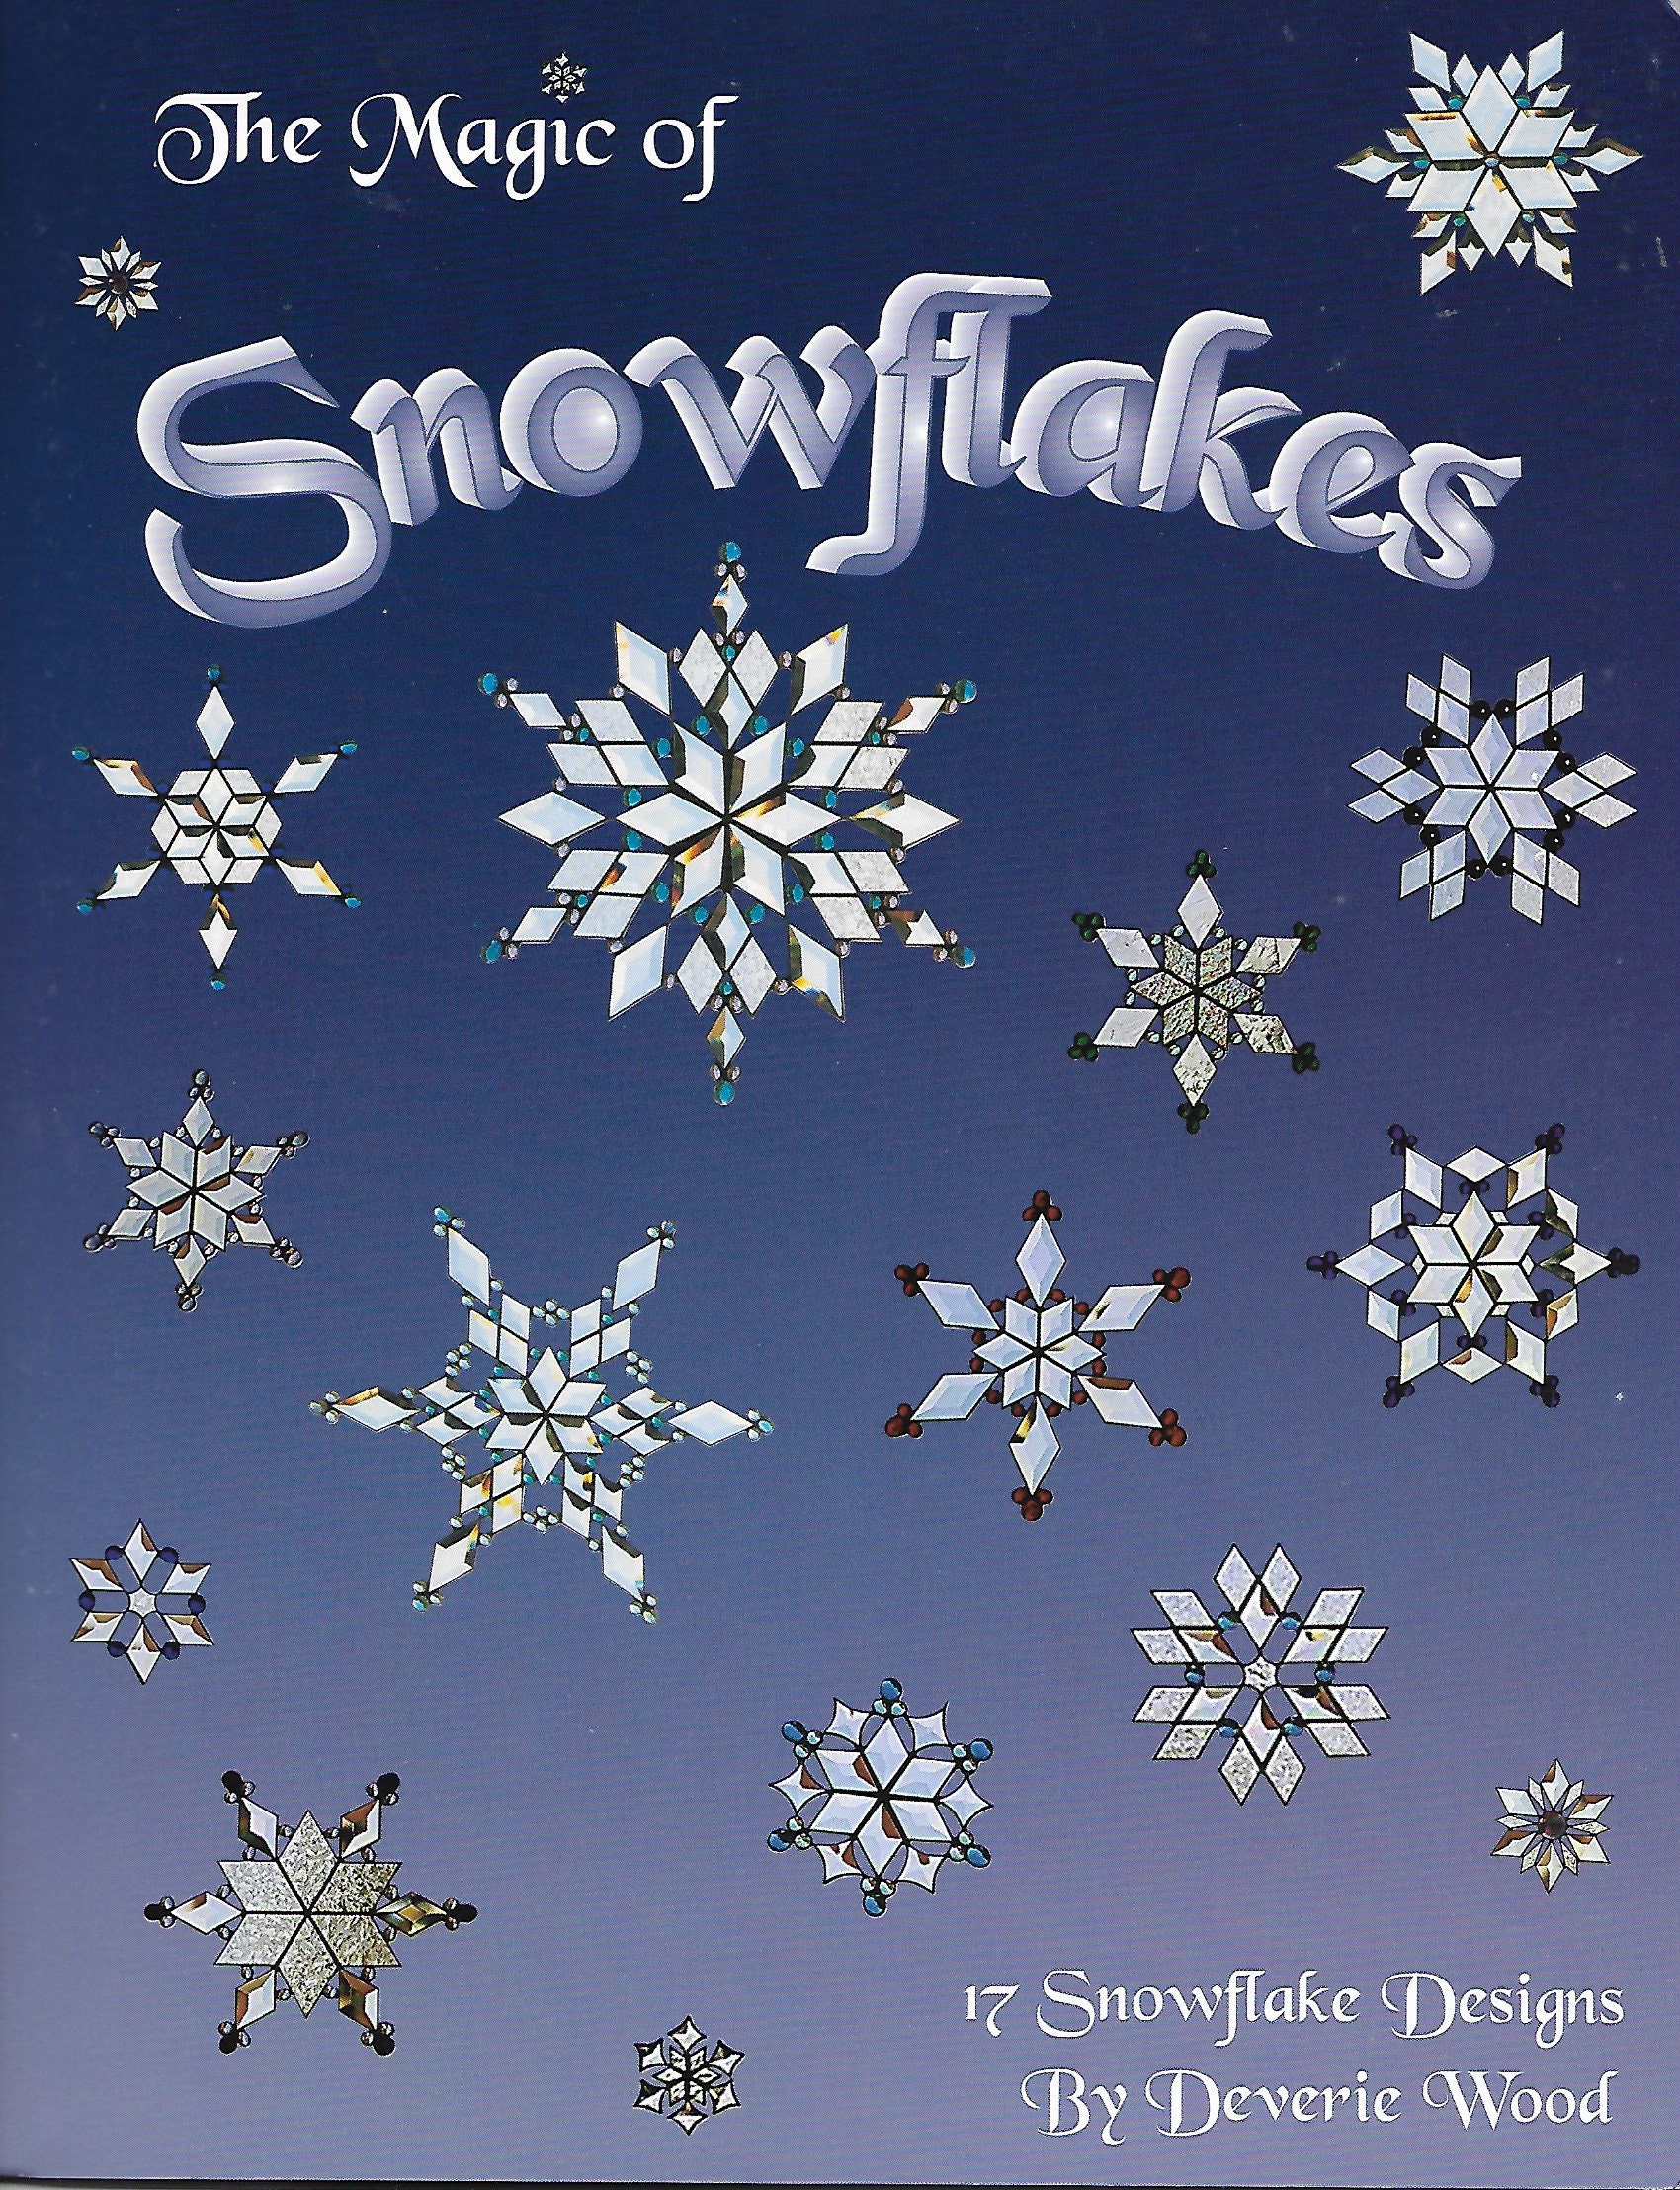 Mosaic Glass Snowflake Ornaments – Loving To Paint